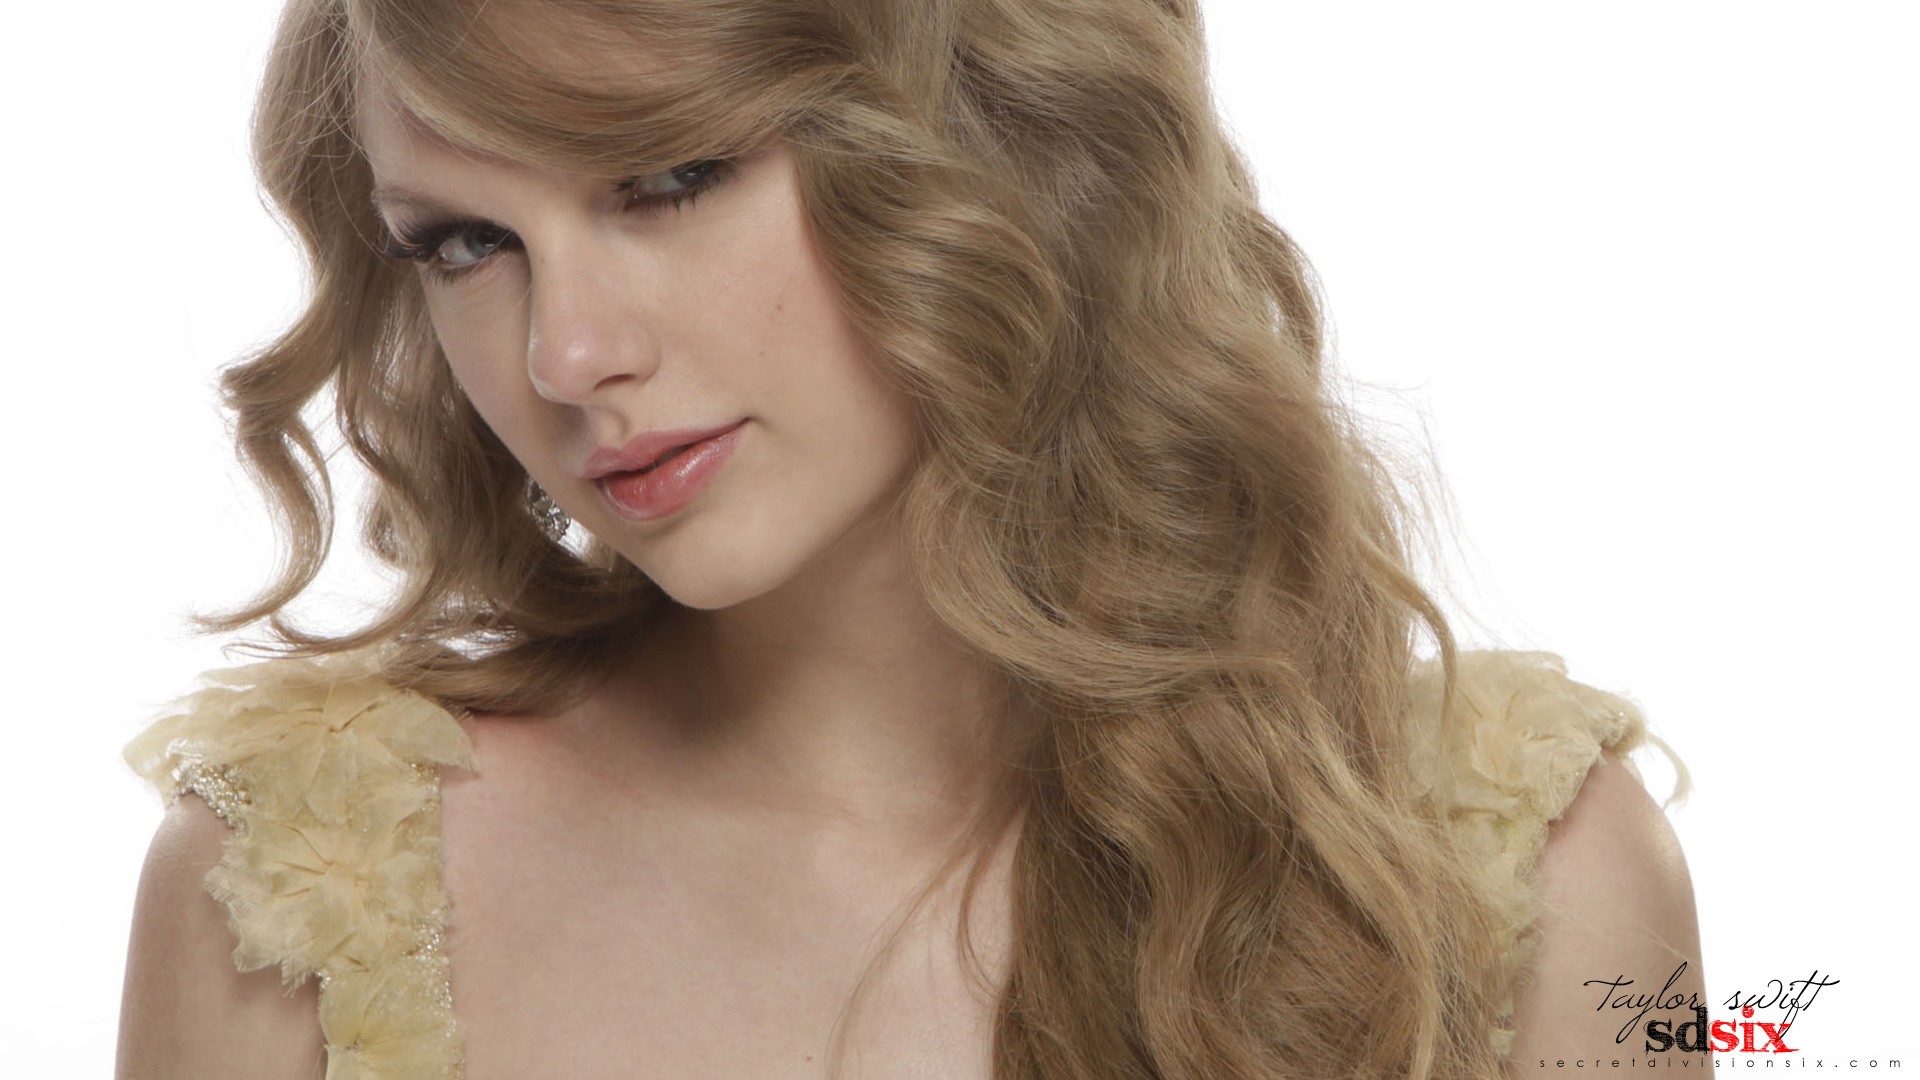 Blondes Women Music Taylor Swift Models Celebrity